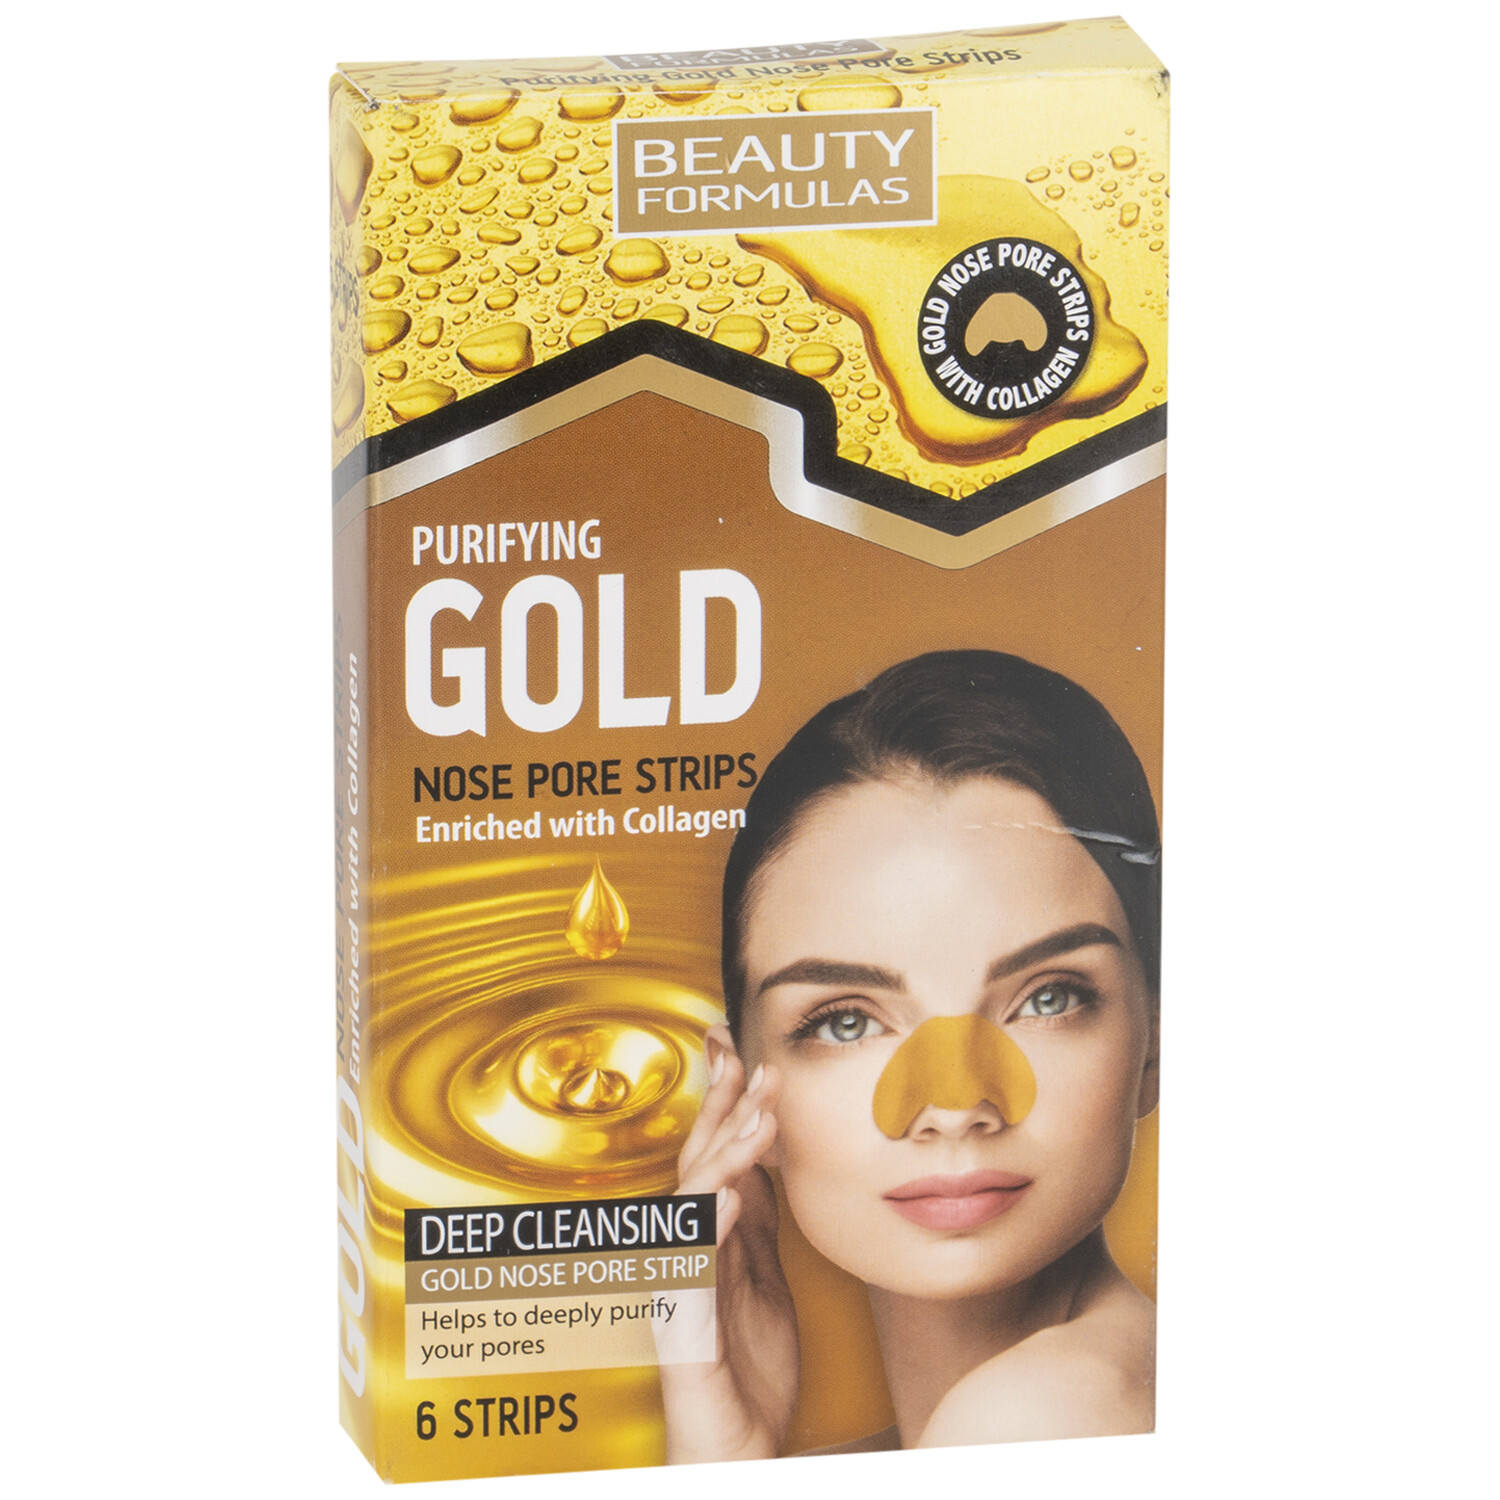 Beauty Formulas Gold Nose Pore Strips Image